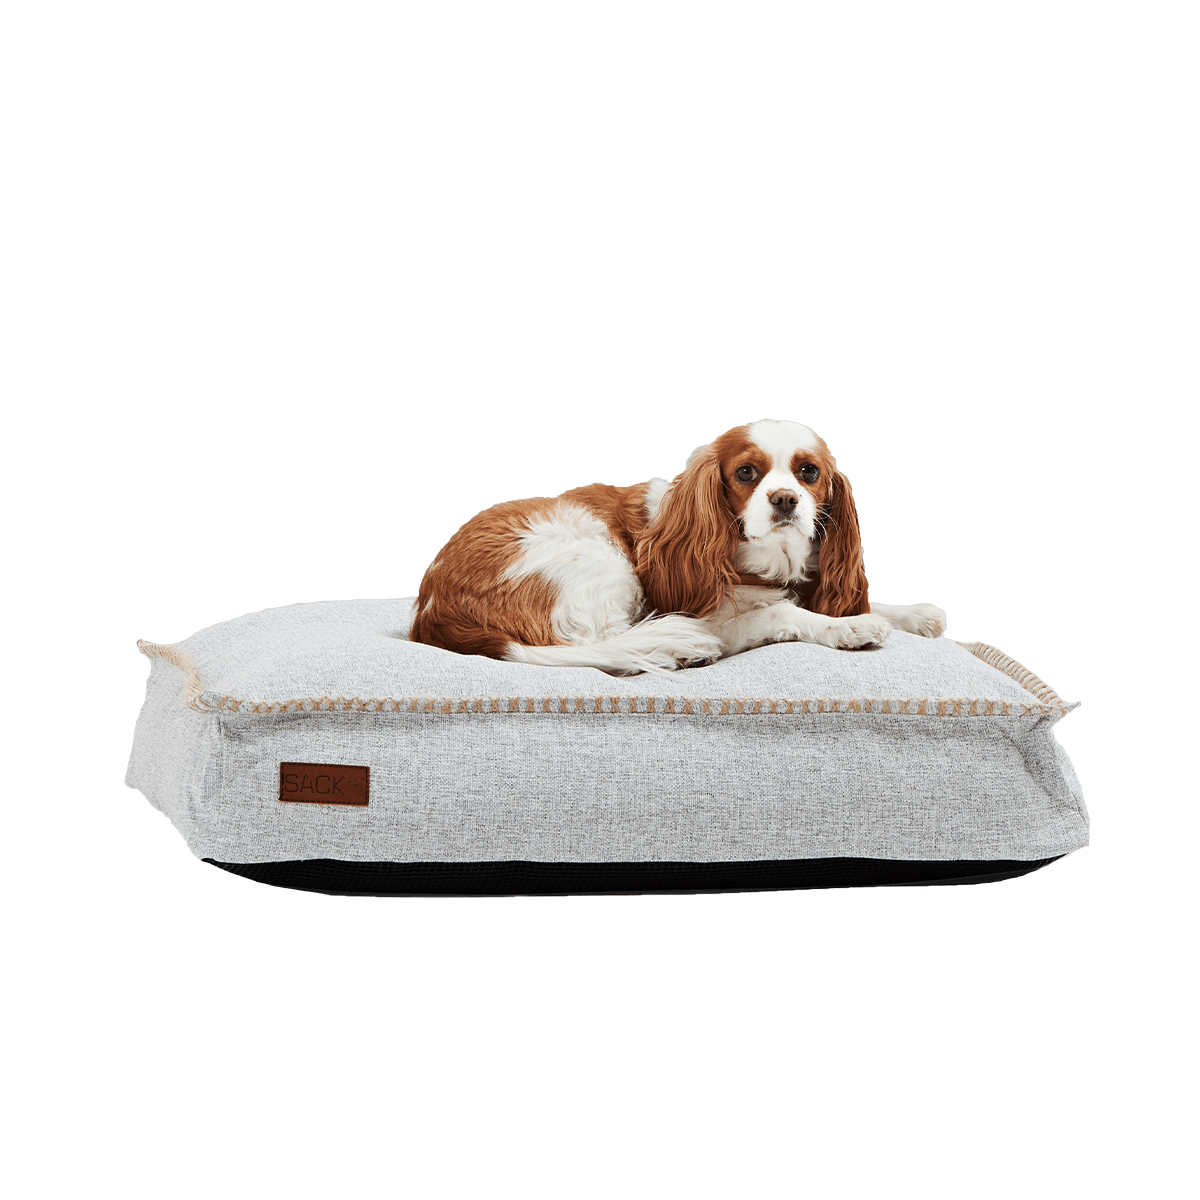 variant_8579011% | Dog bed [Contract] - Cobana White Medium | SACKit